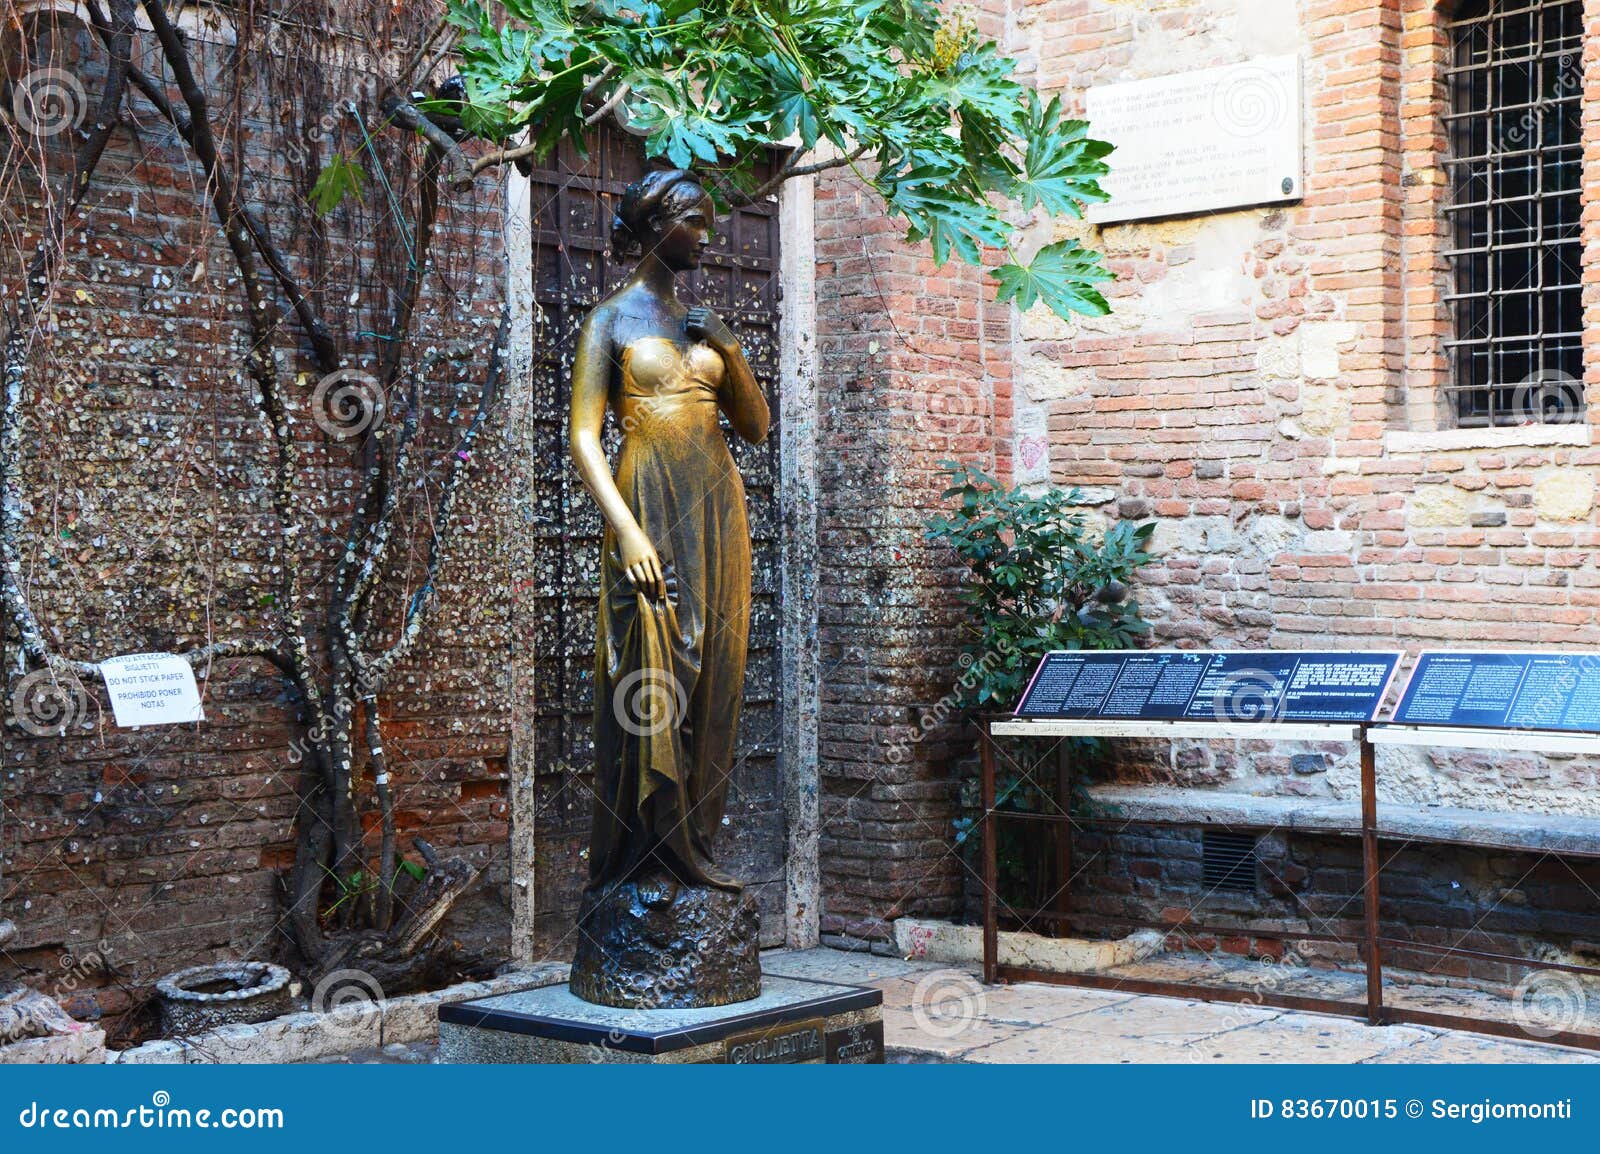 Very famous Juliet statue in Verona, Italy